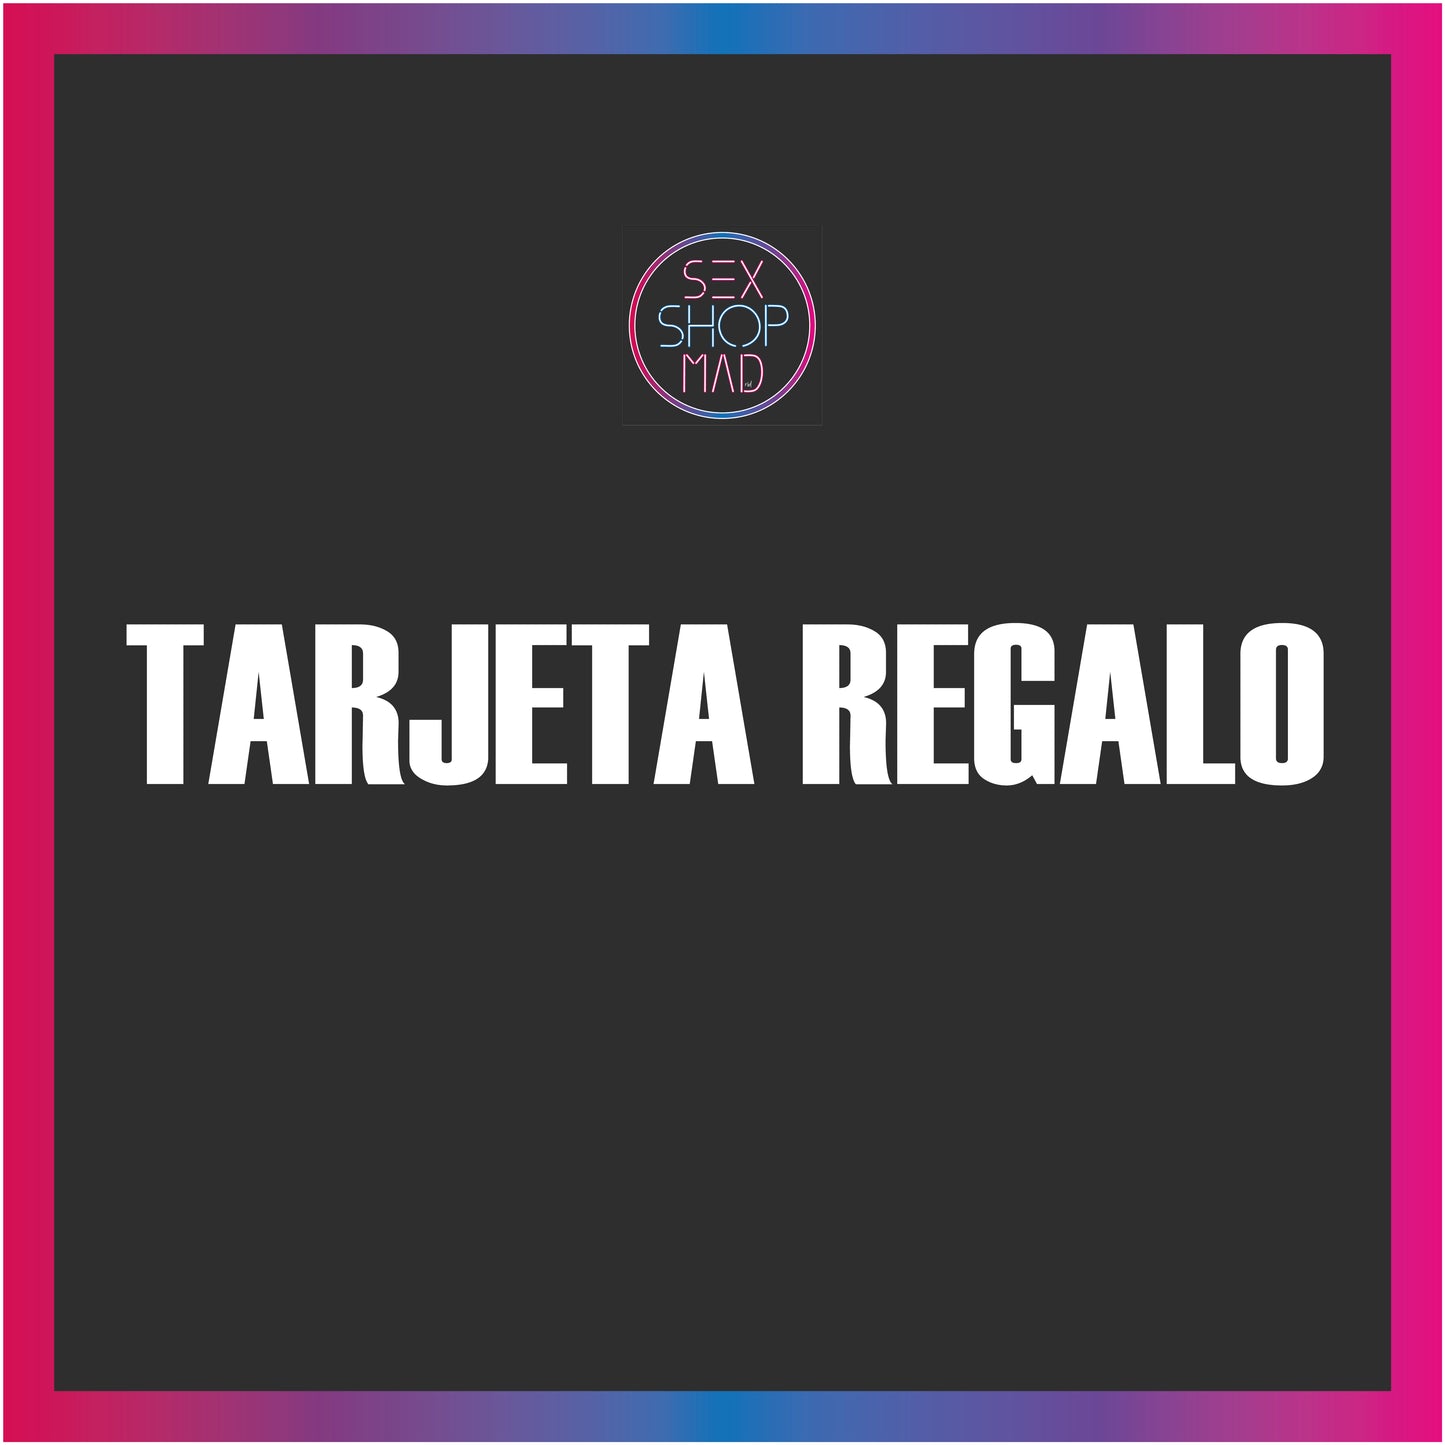 TARJETA REGALO SEXSHOPMAD.COM